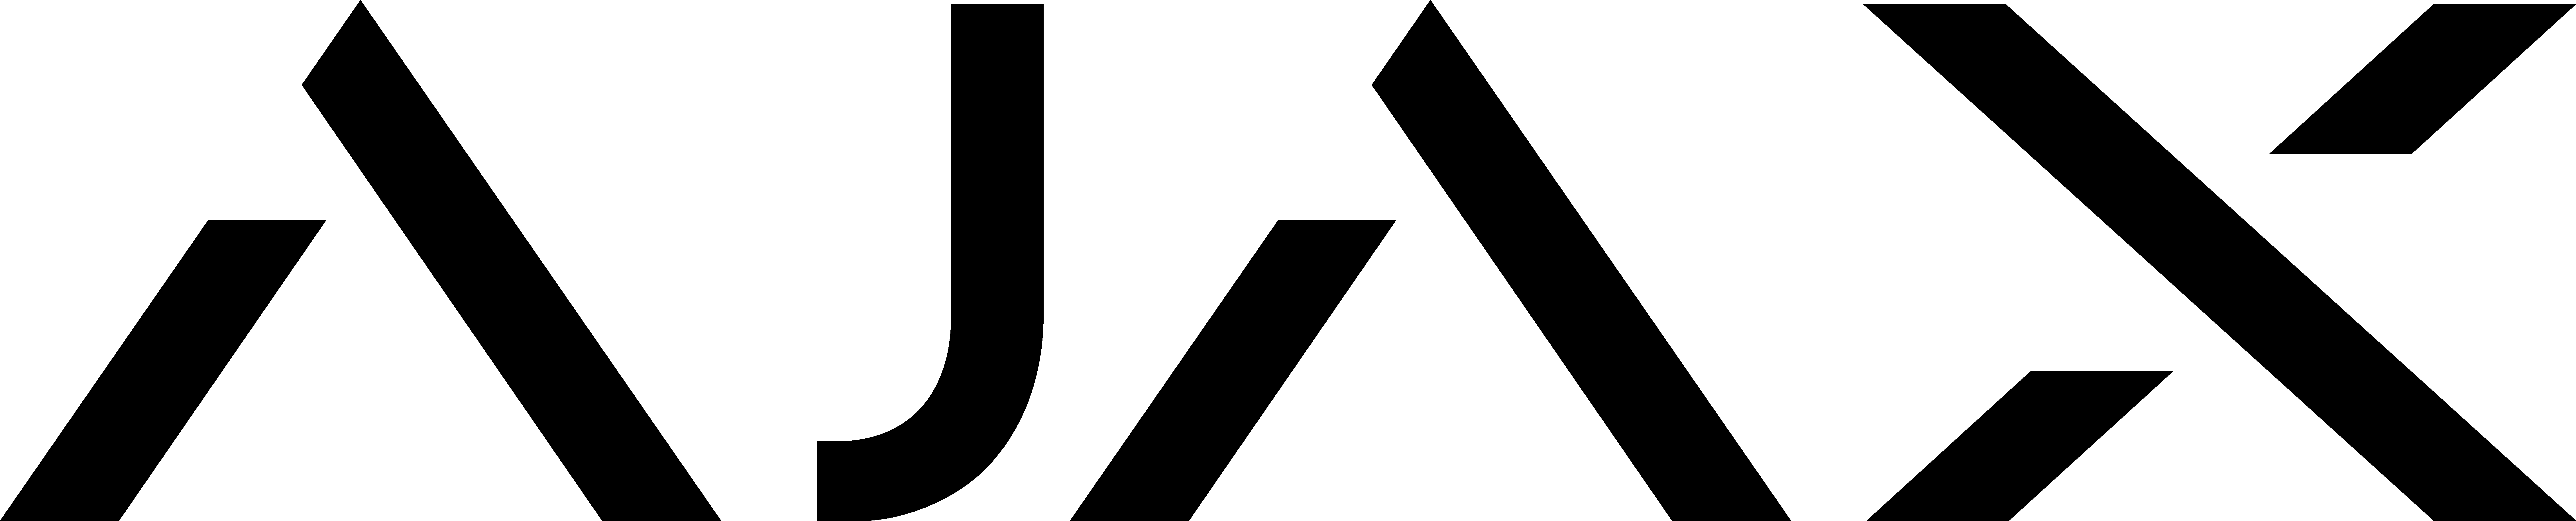 ajax-logo-black